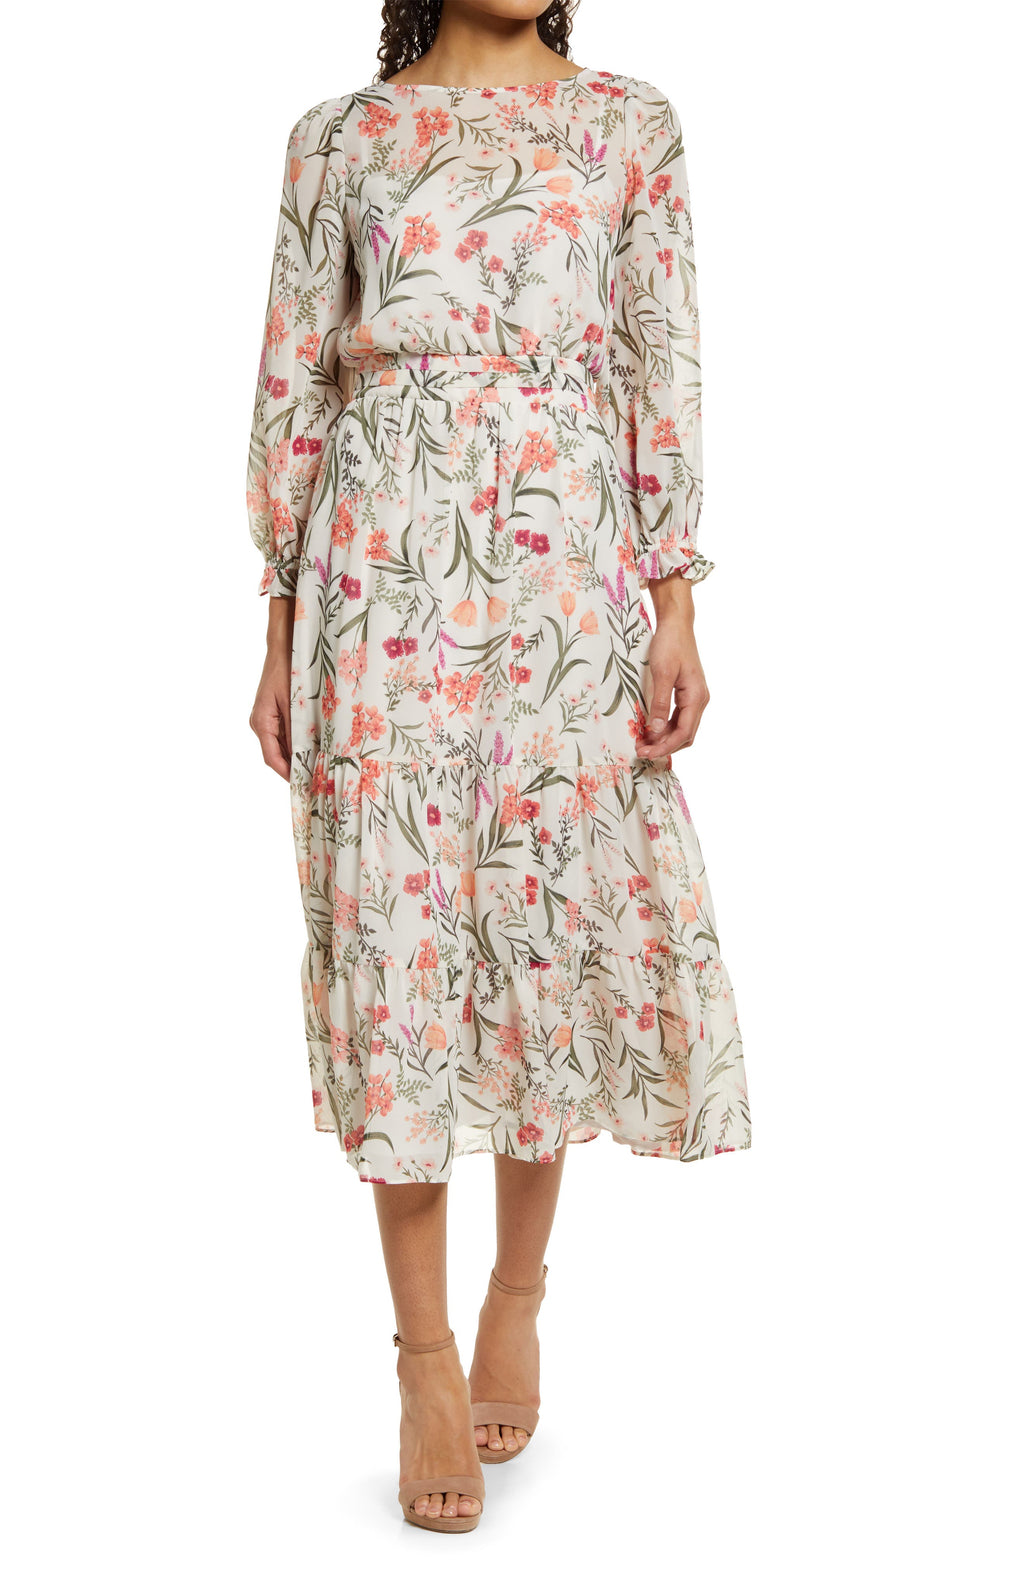 ELIZA J Floral Long Sleeve Midi Dress, Main, color, PINK